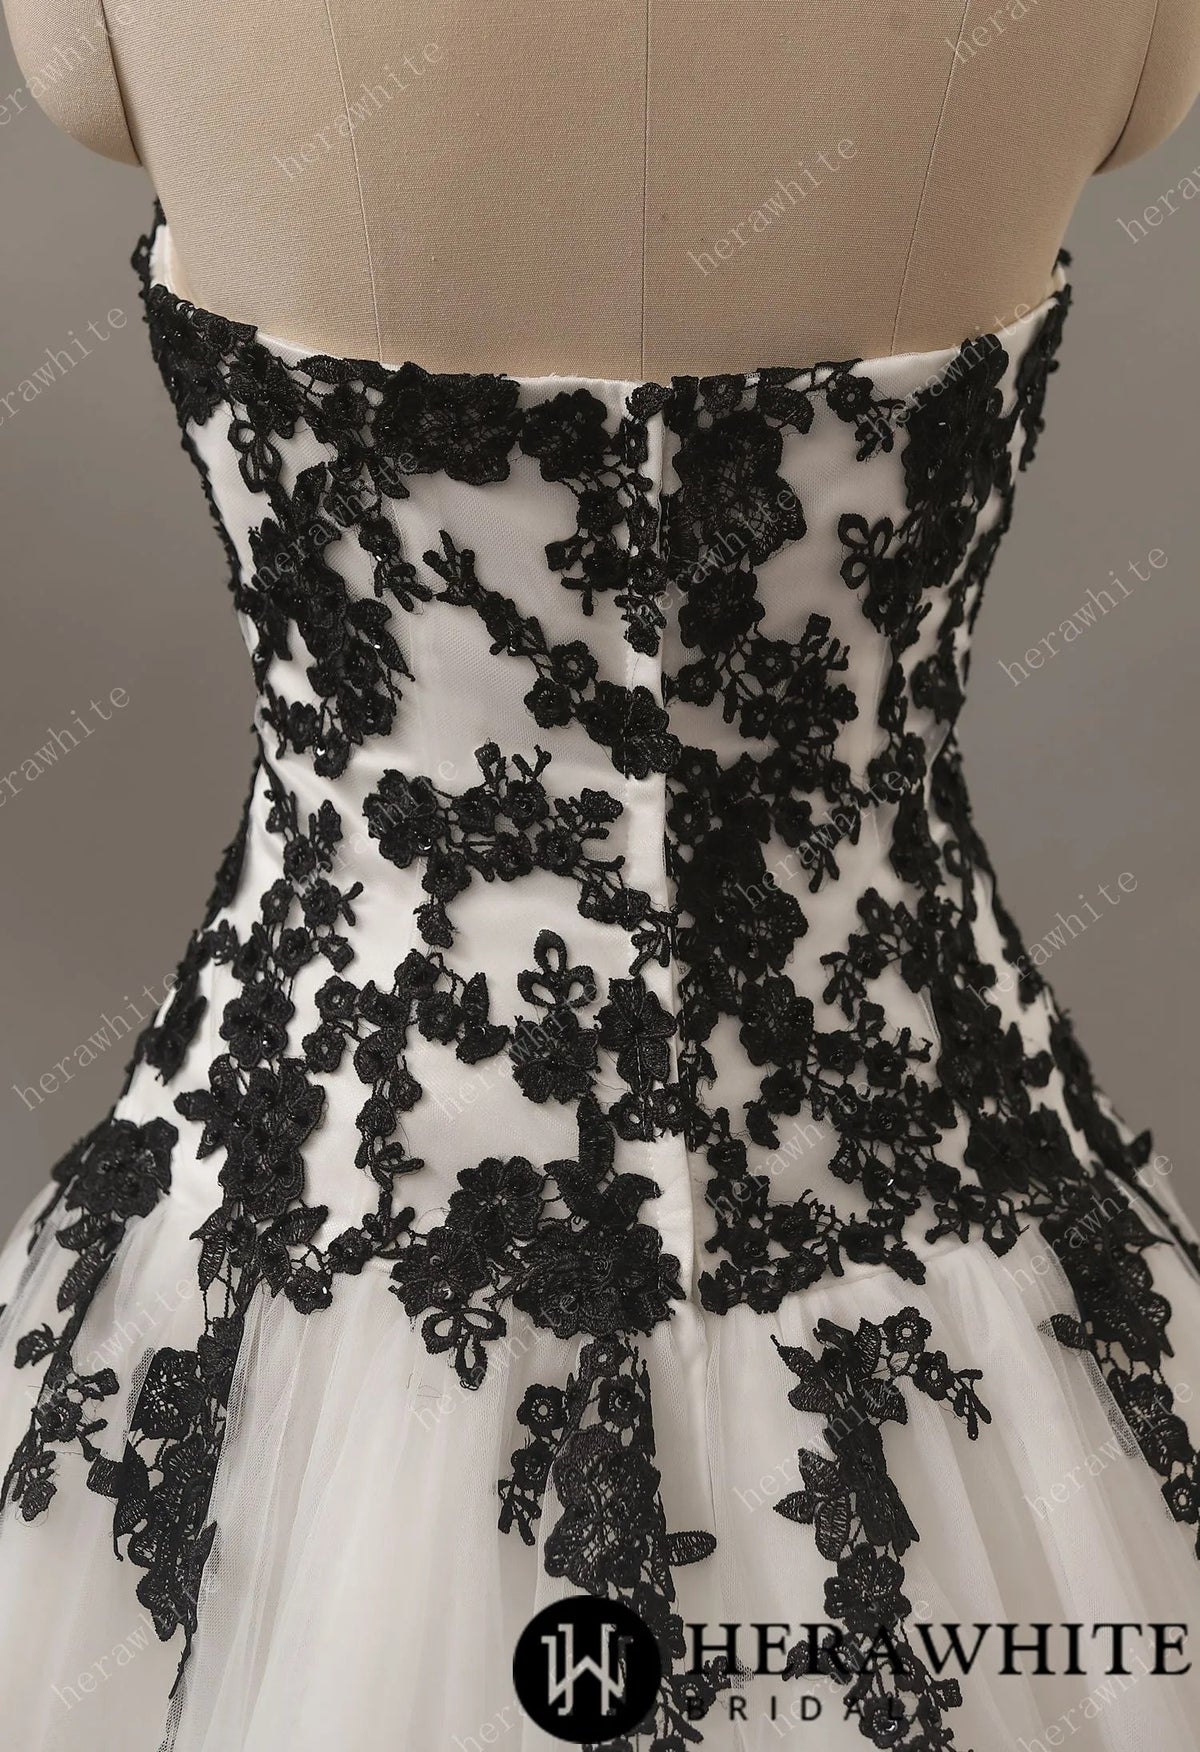 Gothic Black White Modern Wedding Dress Sleeveless Bridal Gown Aline Sweetheart Neckline Backless Strapless Black Lace Modern Style